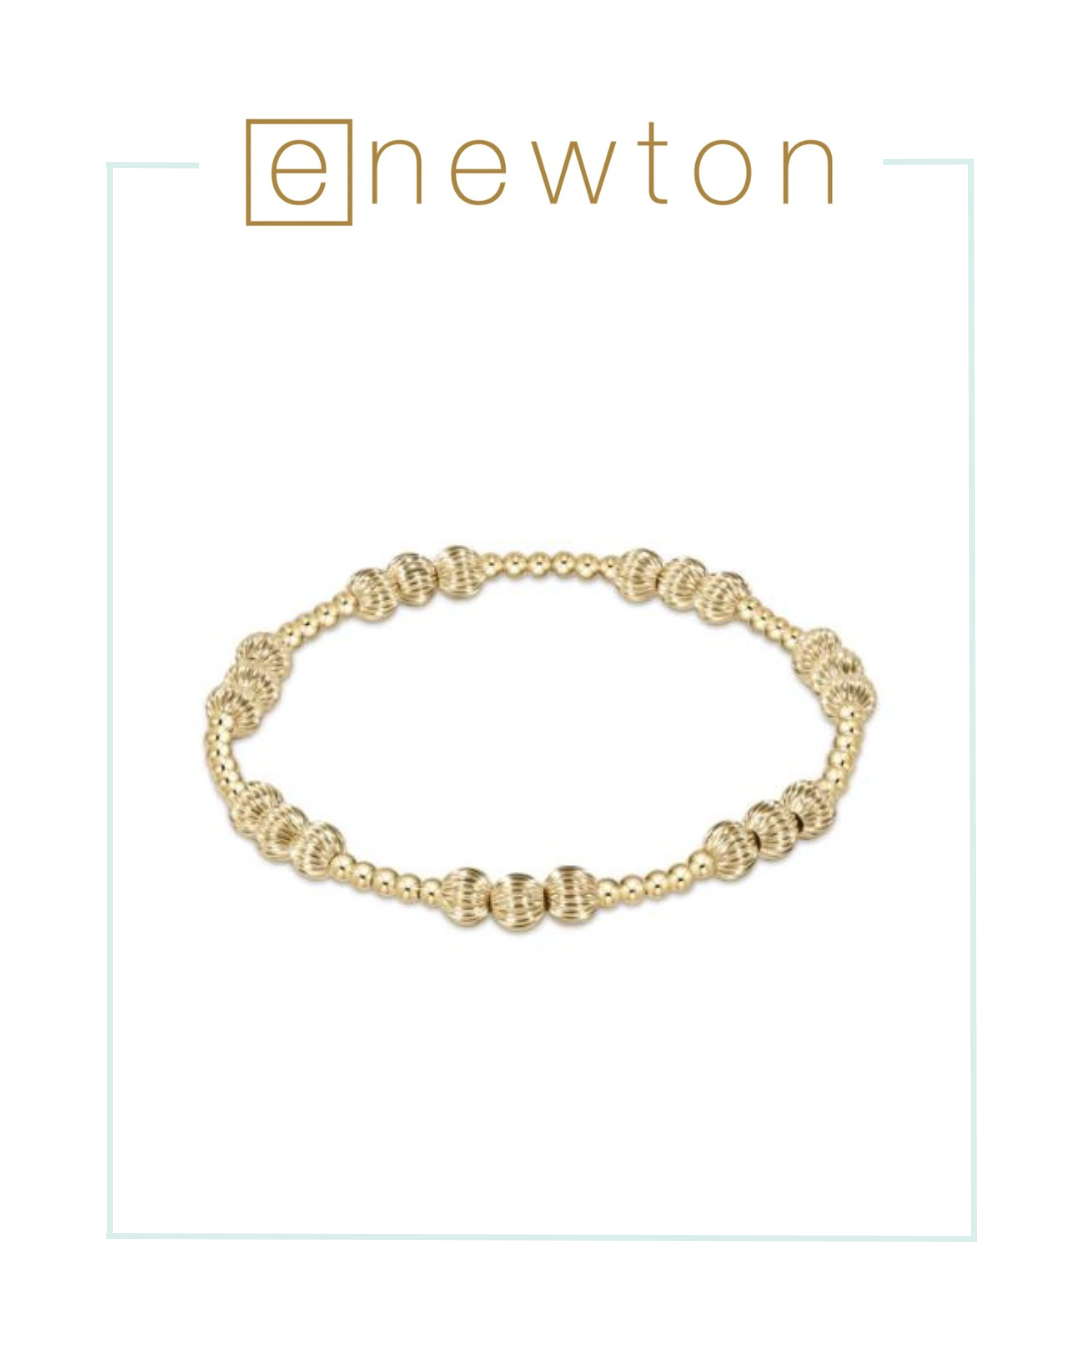 E Newton Dignity Joy Pattern 5mm Bead Bracelet - Gold-Bracelets-ENEWTON-The Village Shoppe, Women’s Fashion Boutique, Shop Online and In Store - Located in Muscle Shoals, AL.